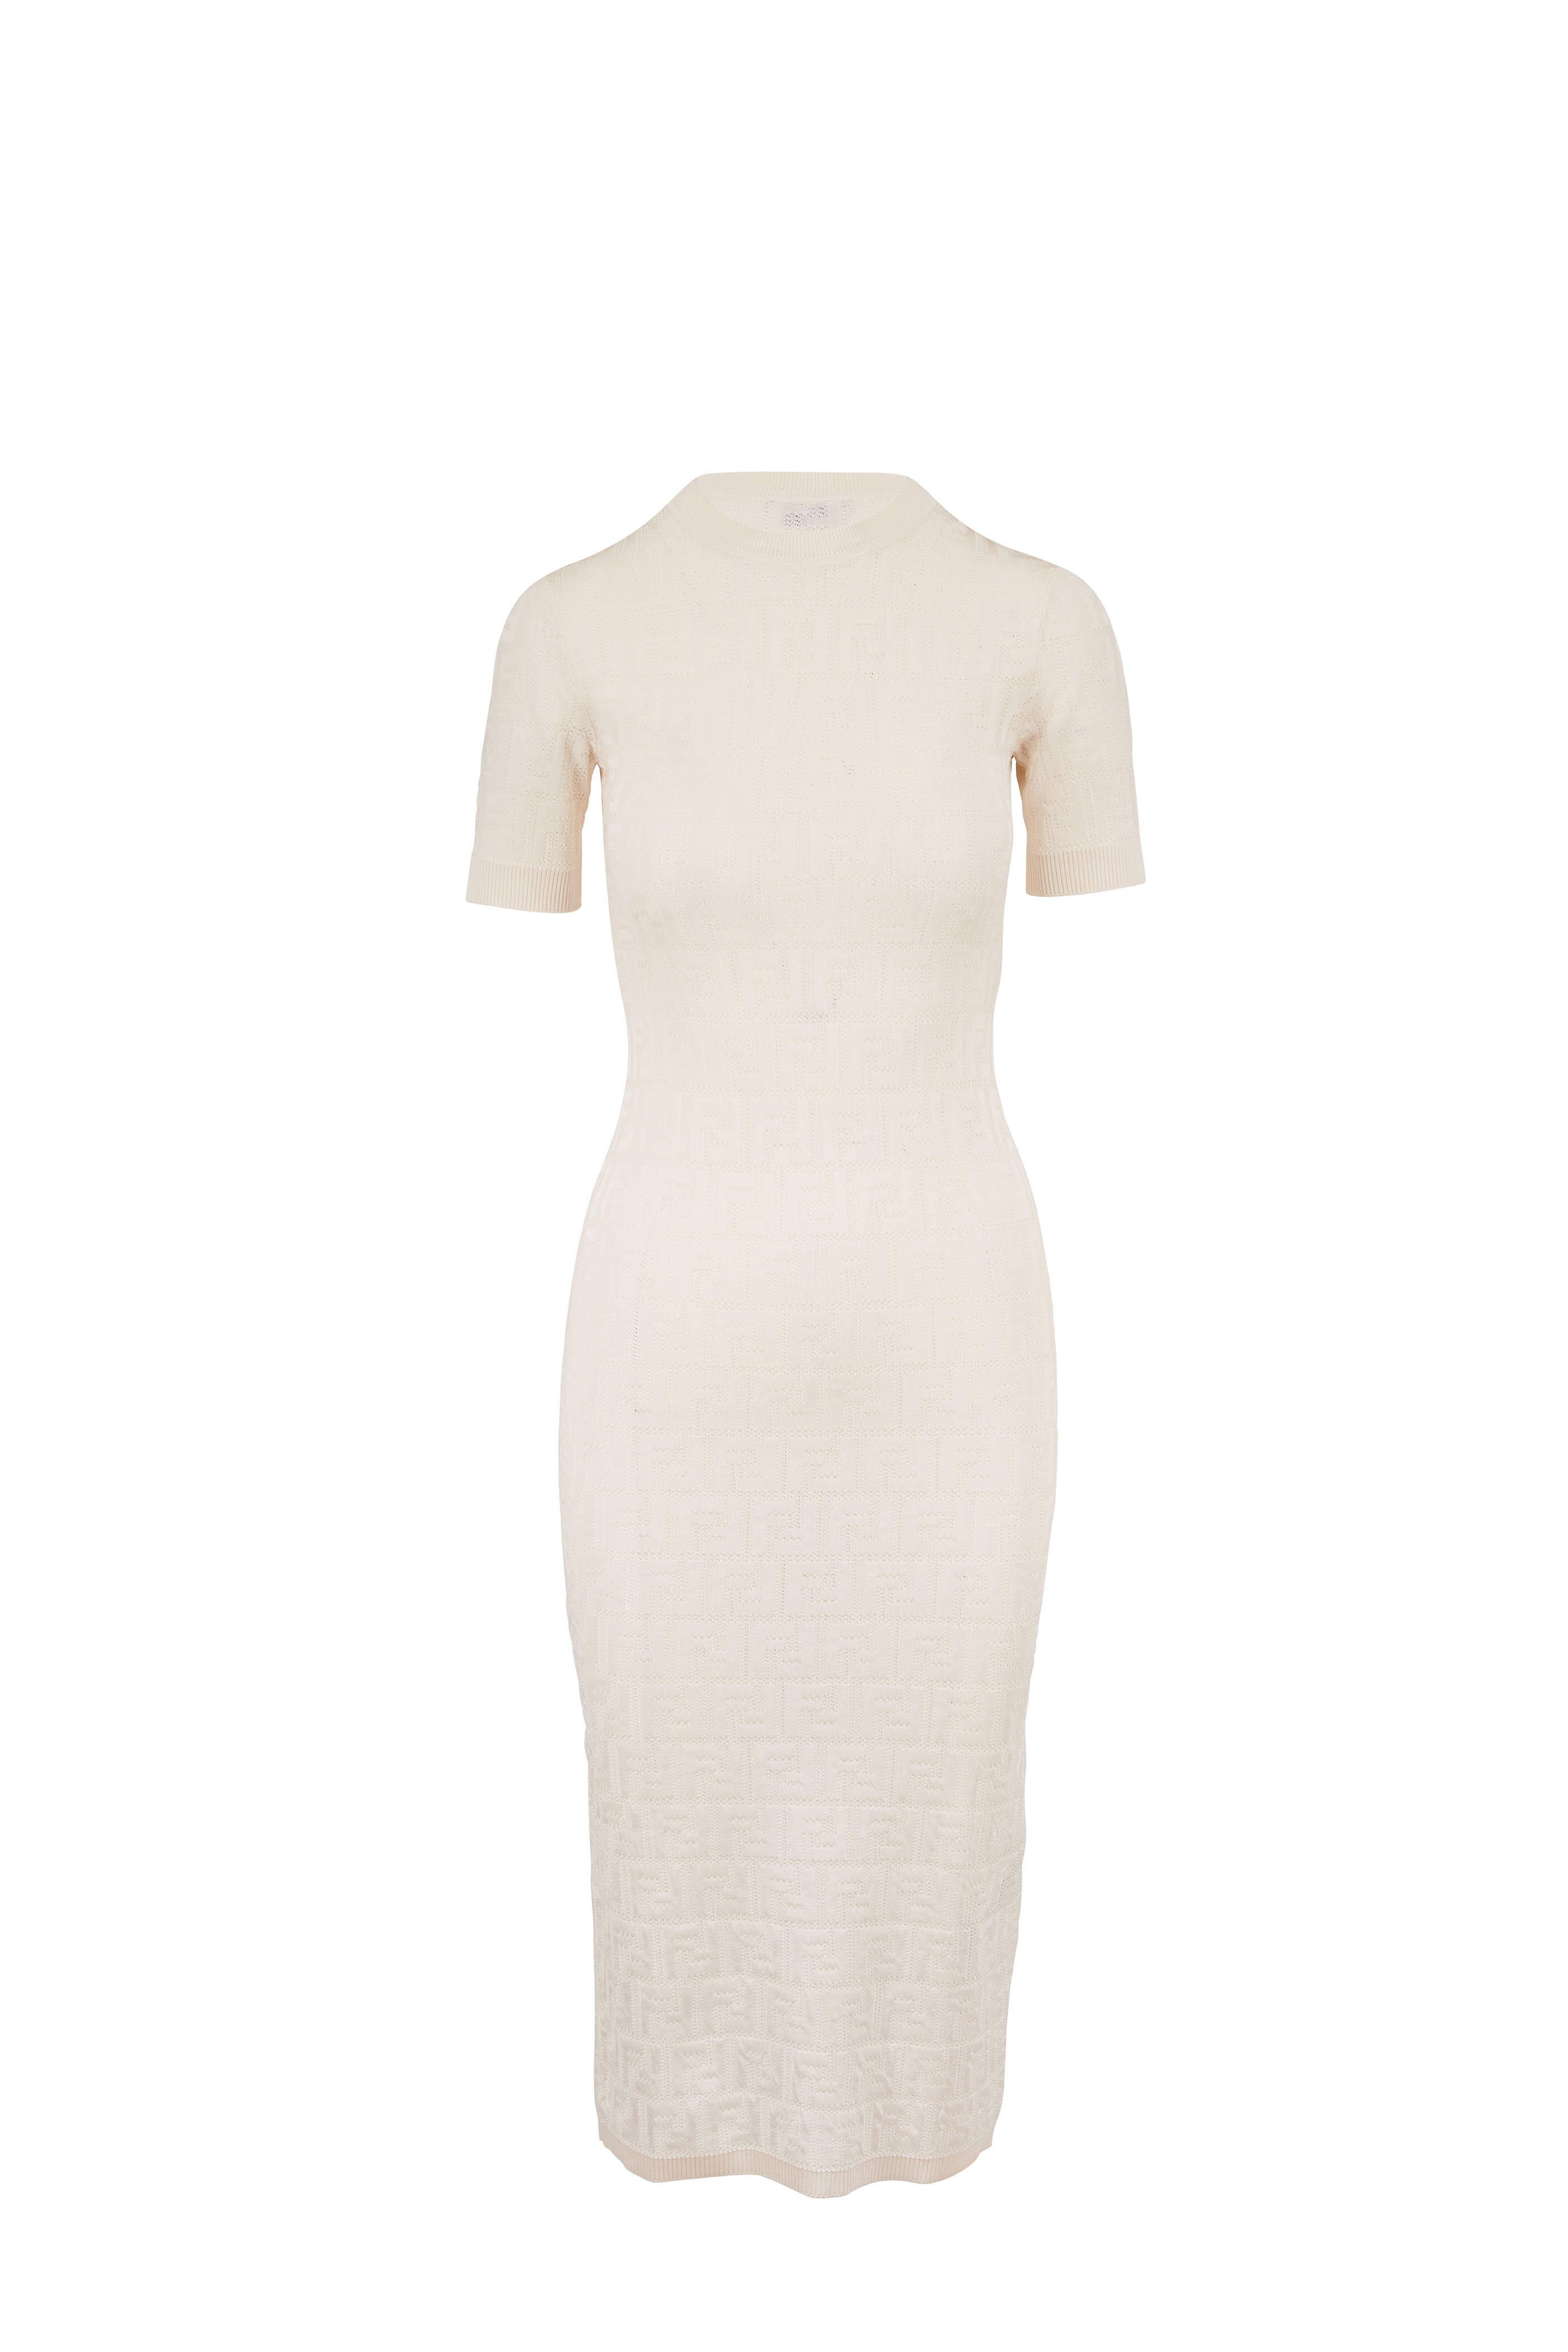 Fendi - White Stretch Cotton FF Short Sleeve Knit Dress